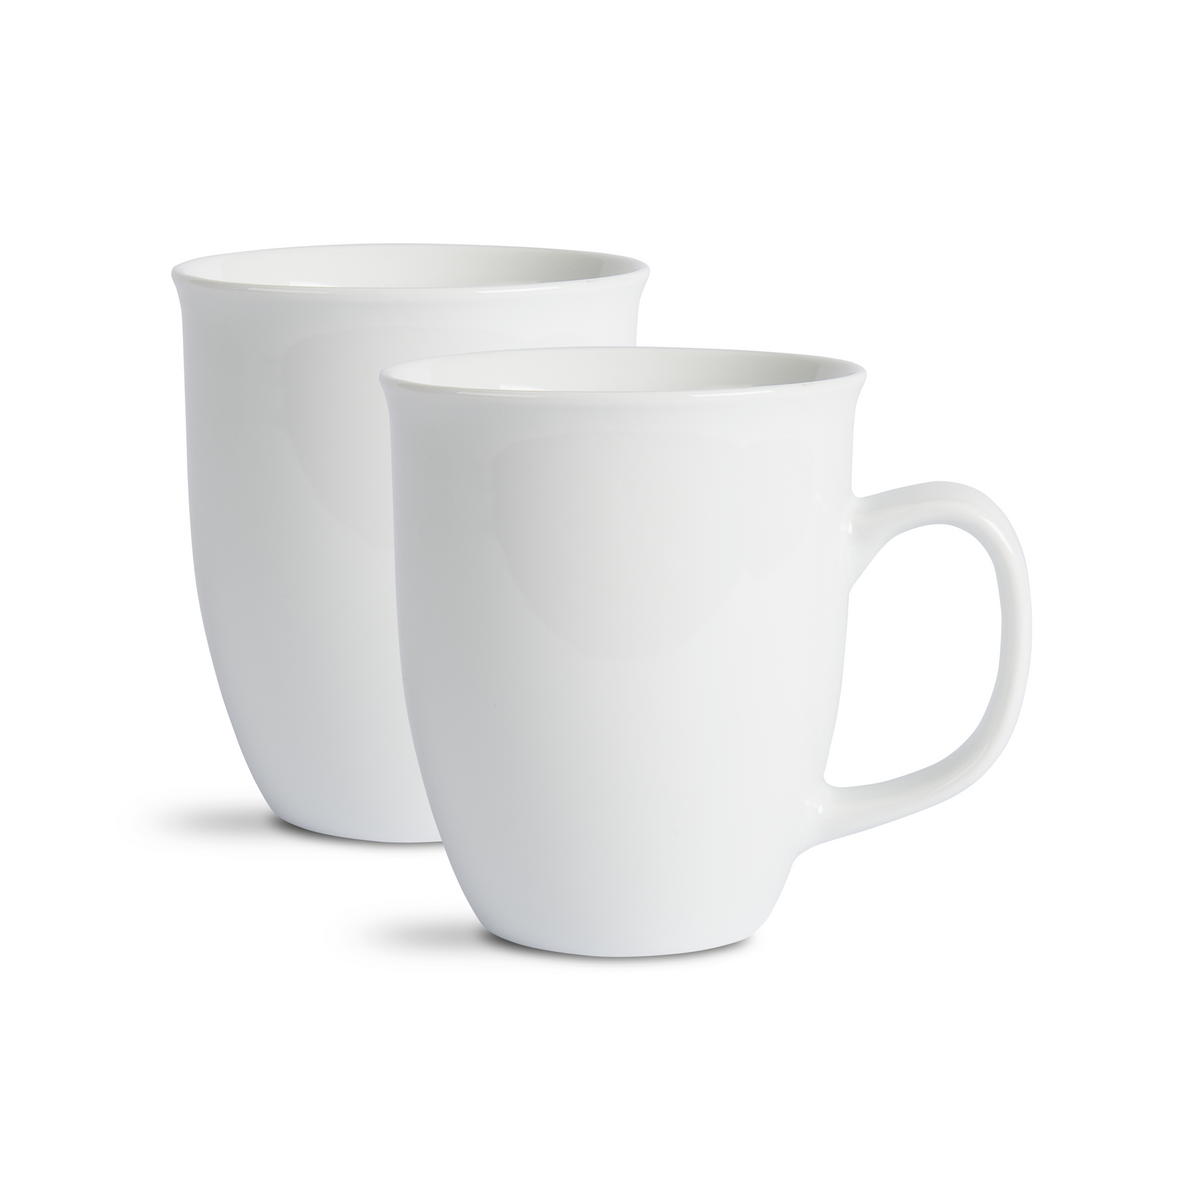 Pair of white porcelain mugs.